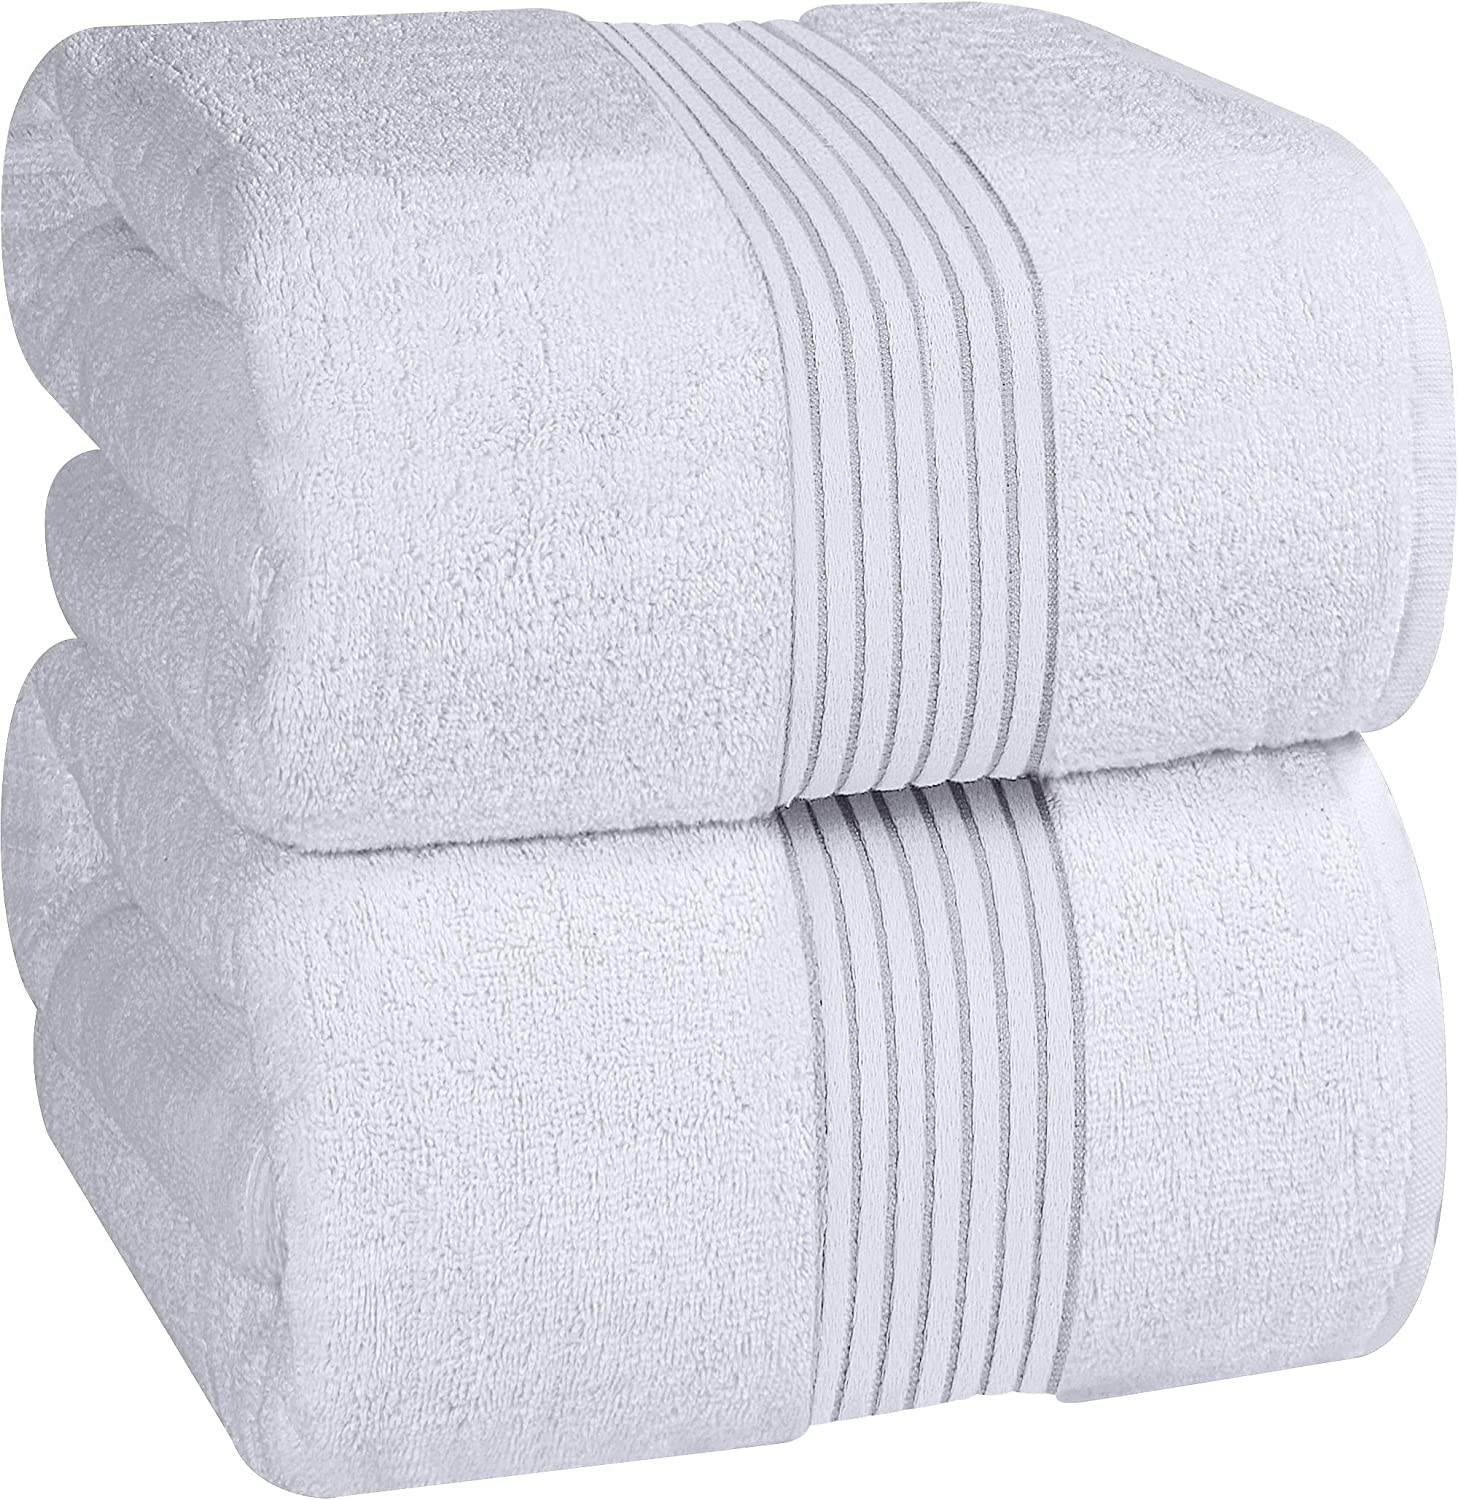 Utopia Towels  2 Toalhas Tamanho Jumbo - 100% Algodão (180 x 90